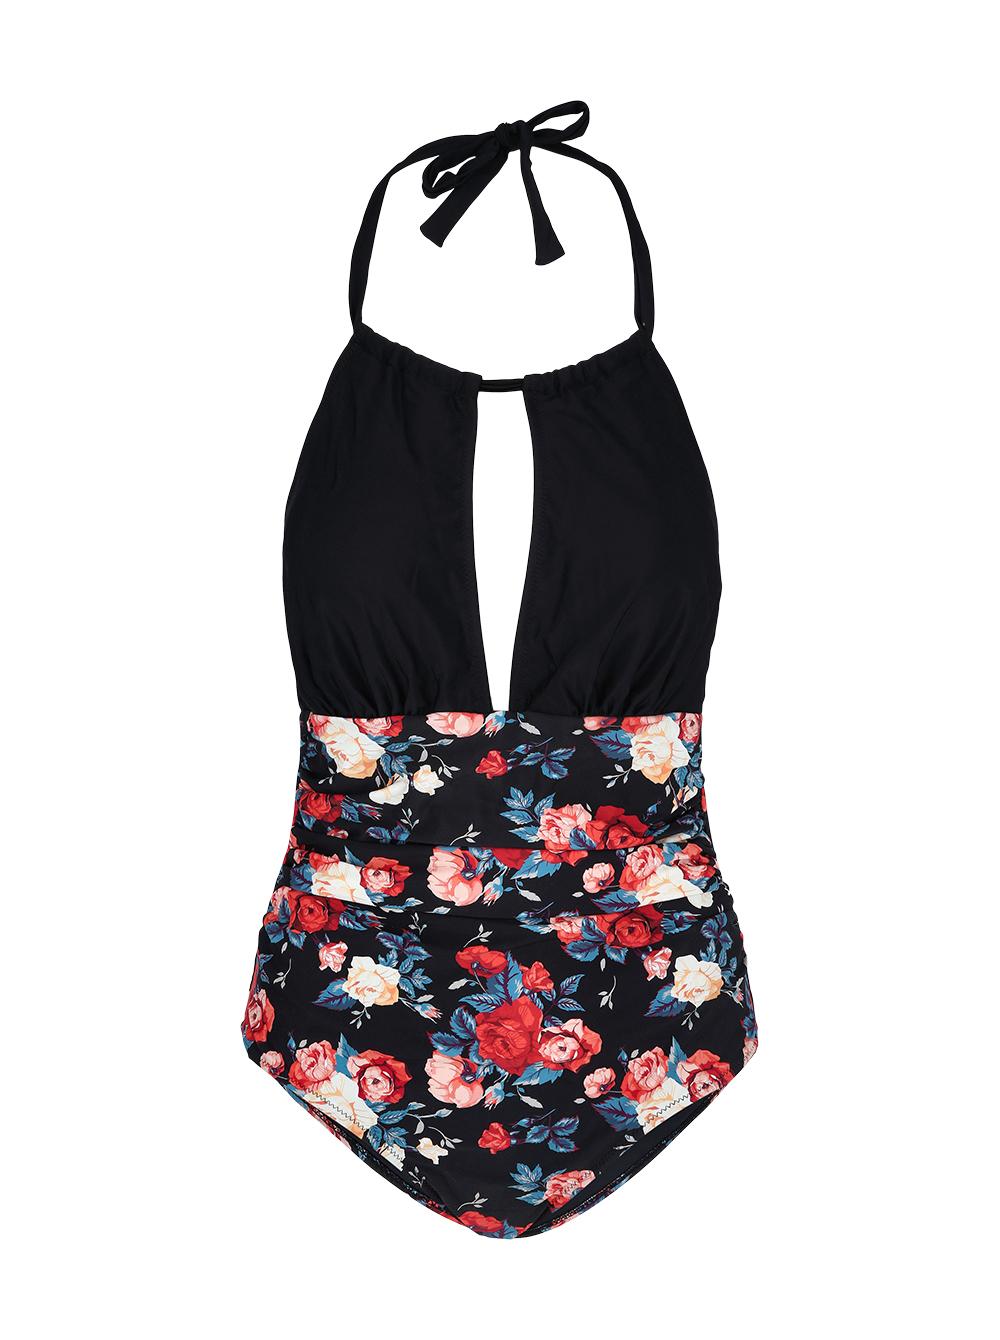 Selected image for CUPSHE Ženski jednodelni kupaći kostim J33 crno-cvetni